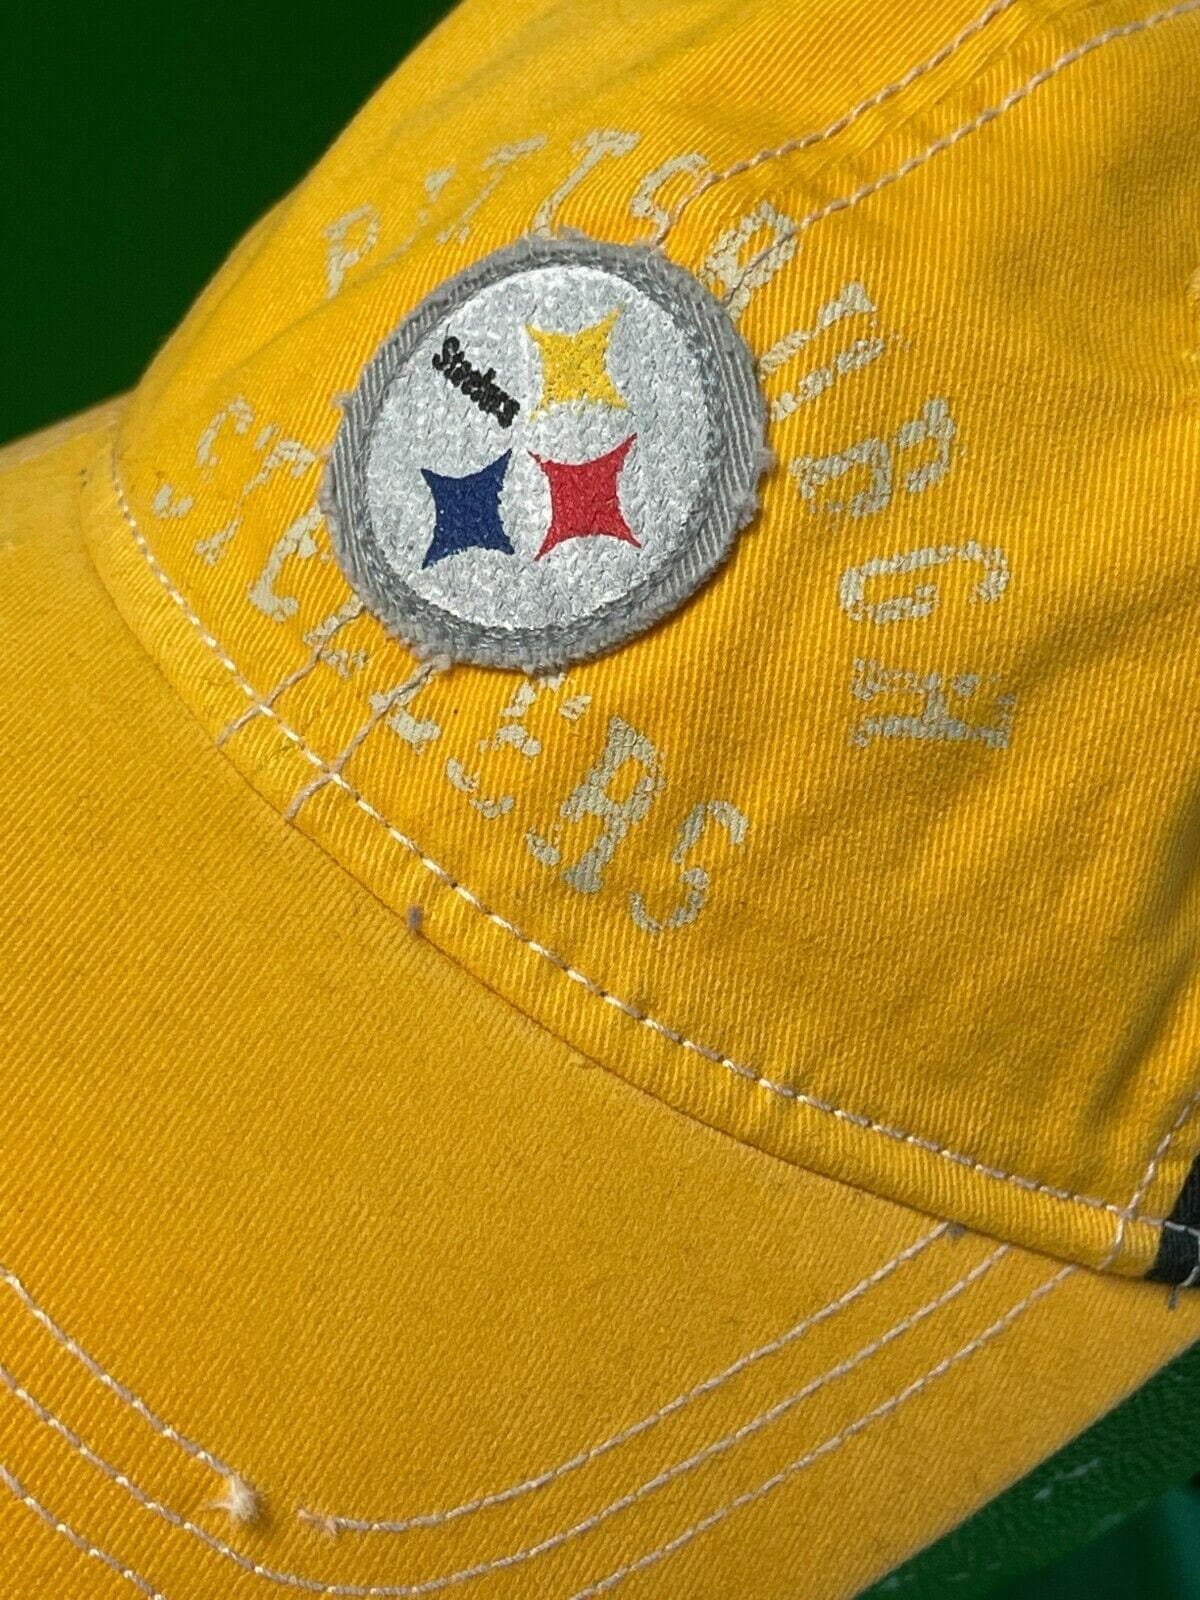 NFL Pittsburgh Steelers Reebok Retro Sport Hat - Cap OSFA